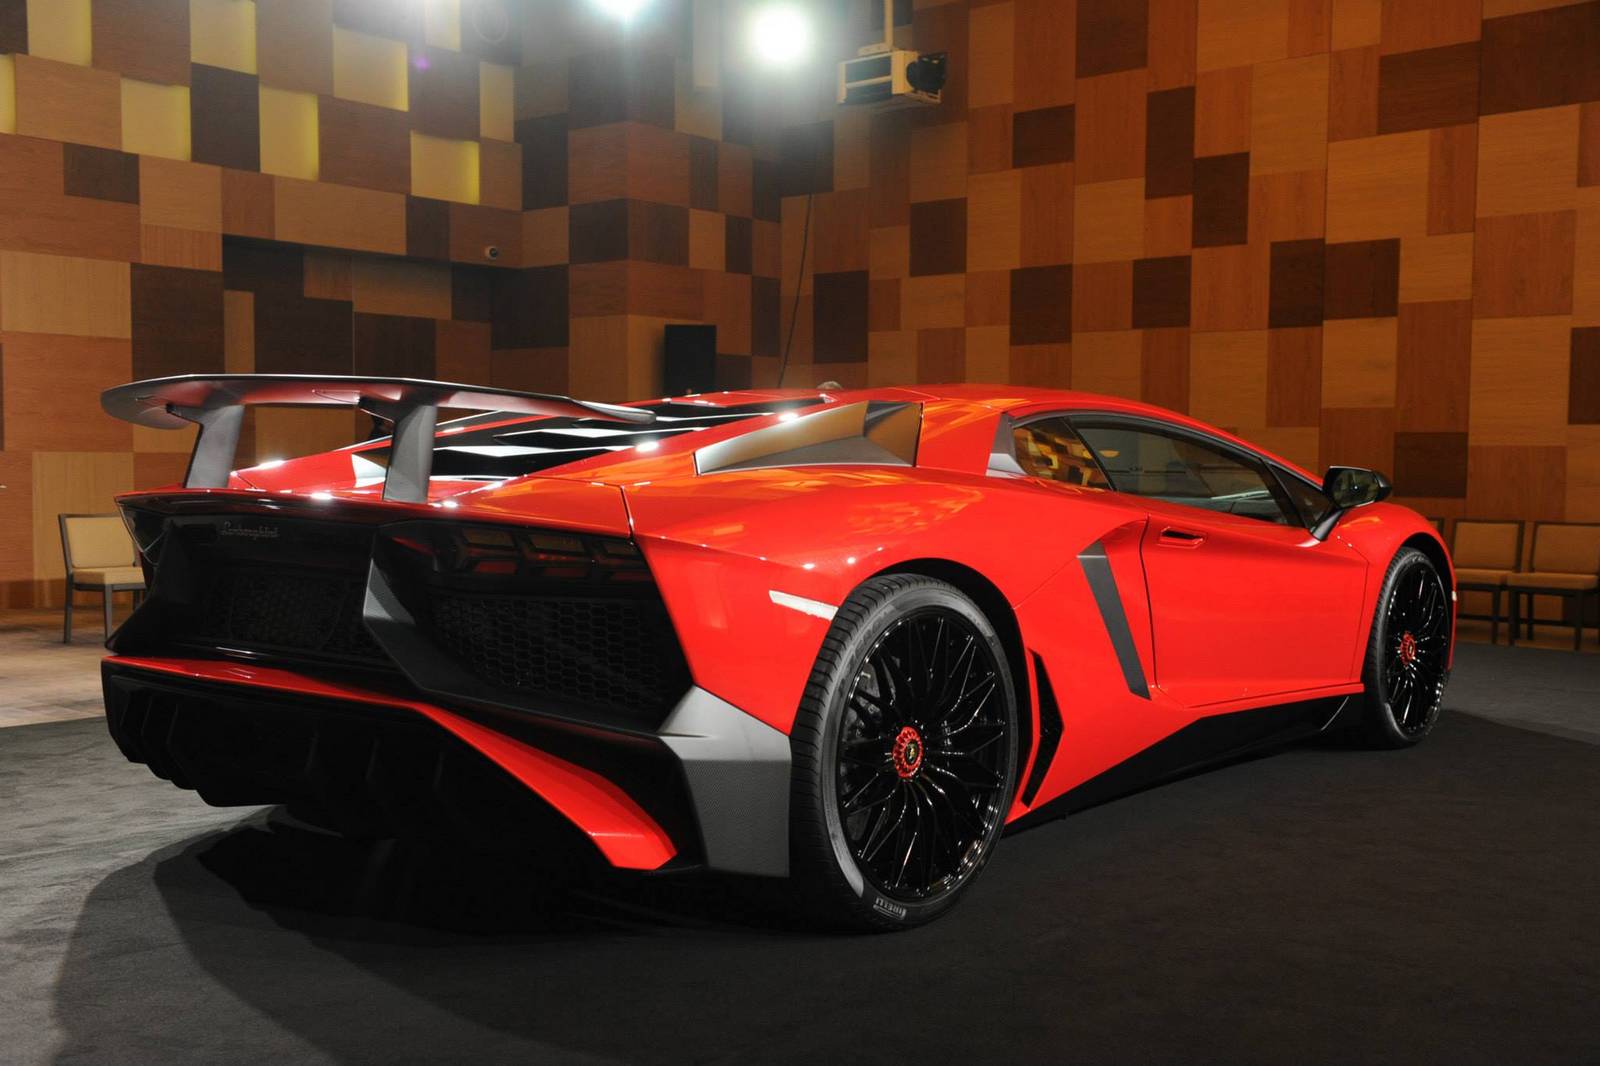 Lamborghini Aventador SV Makes Debut in Singapore - GTspirit